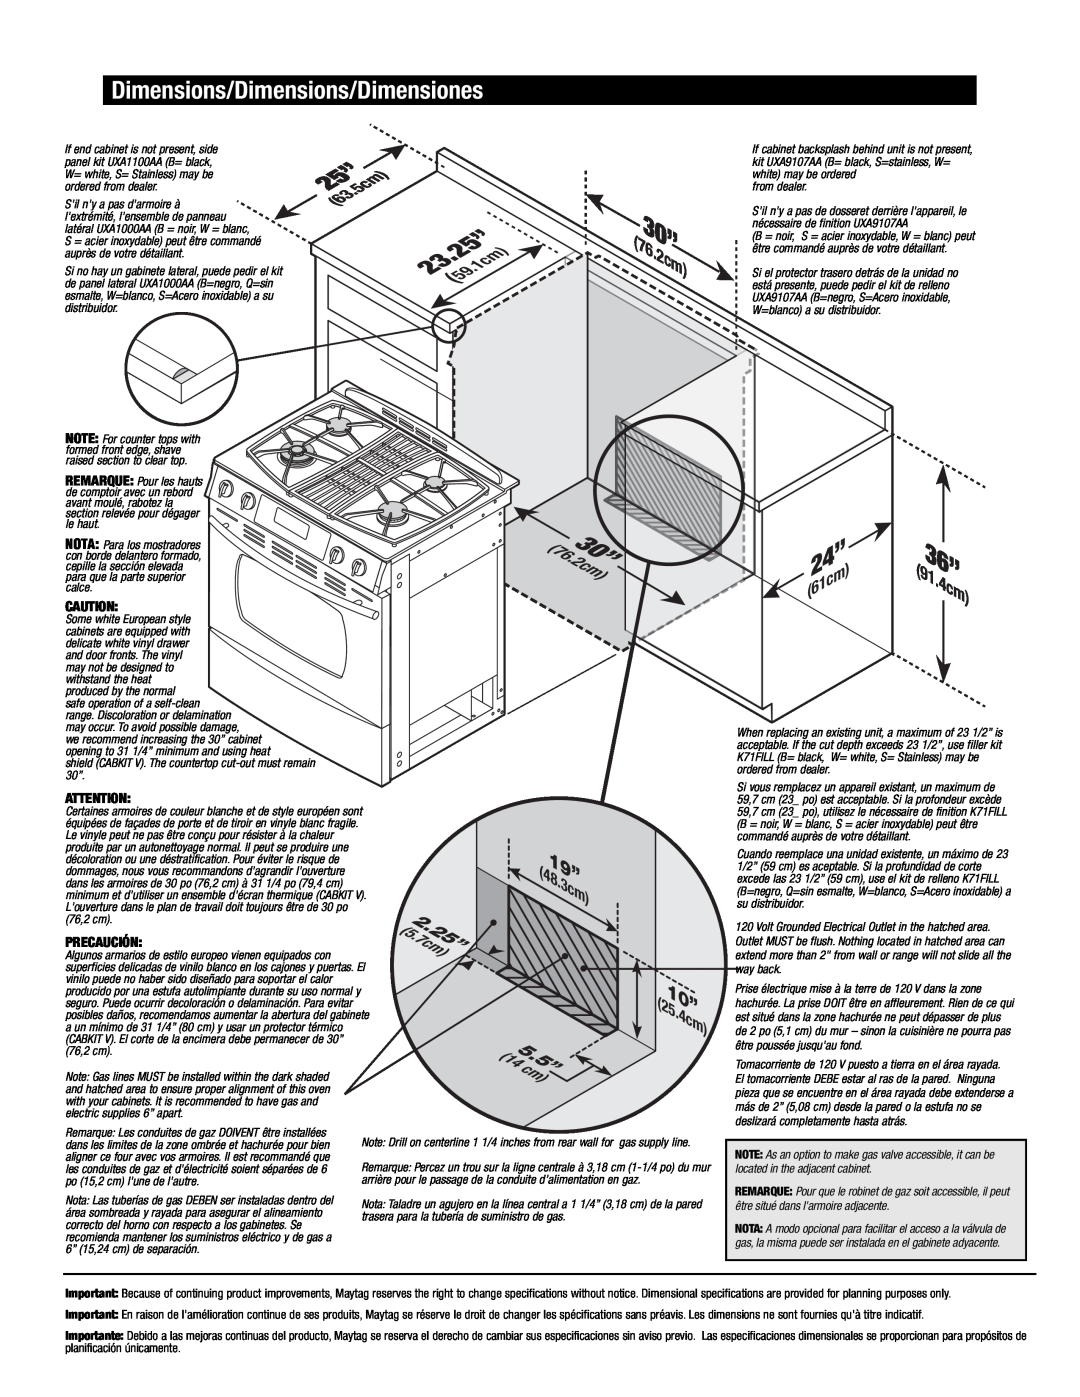 Jenn-Air Oven manual Dimensions/Dimensions/Dimensiones, 210”, 76.30” 2cm, Precaución, 48.19” 3cm 